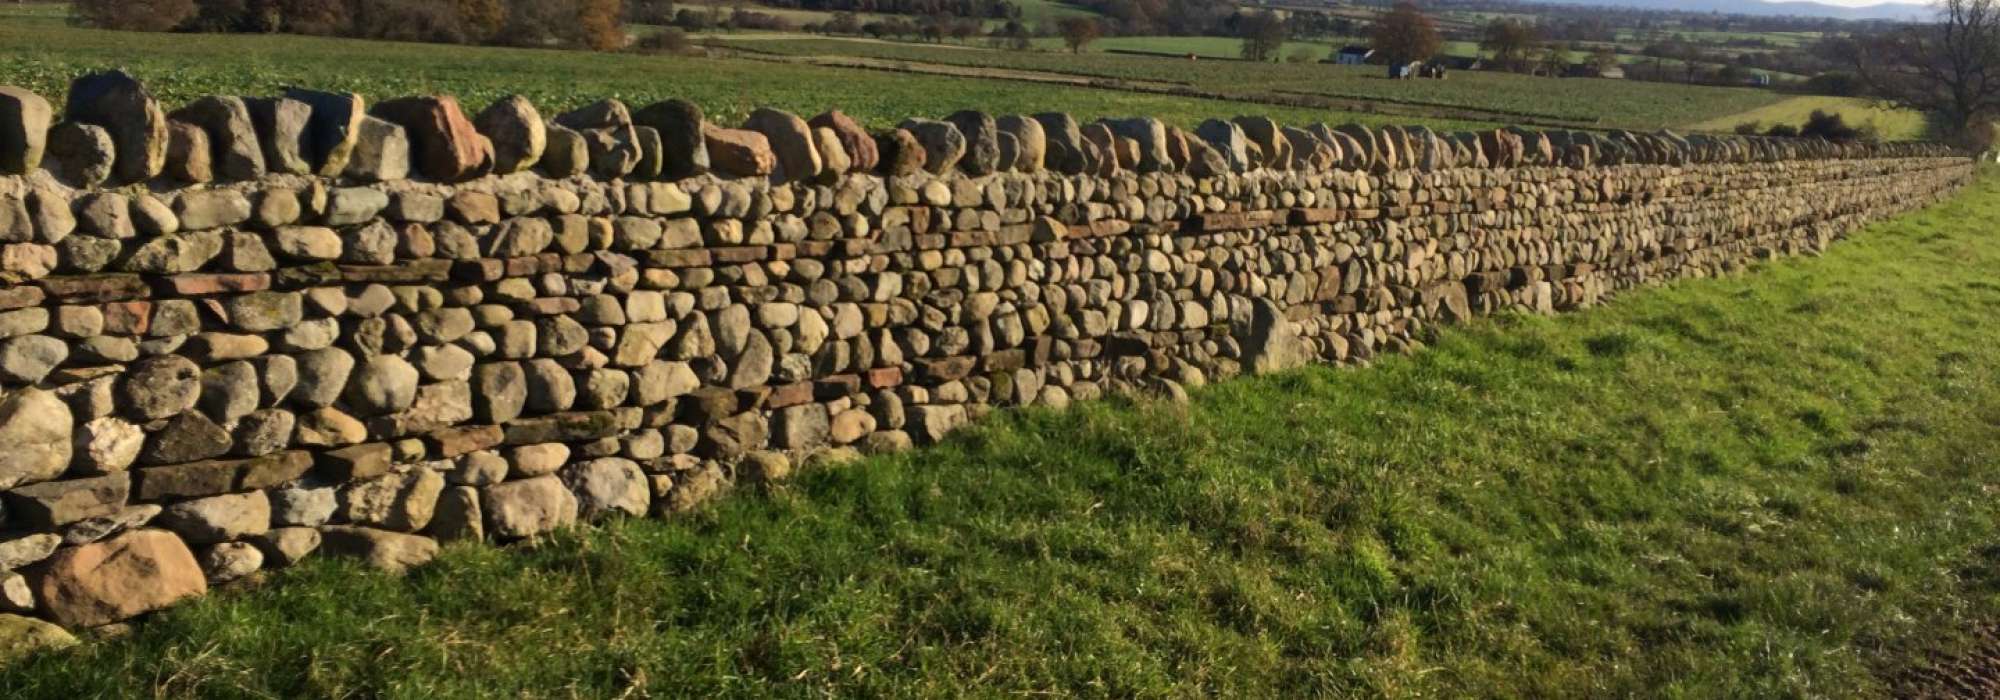 Stone wall in a field